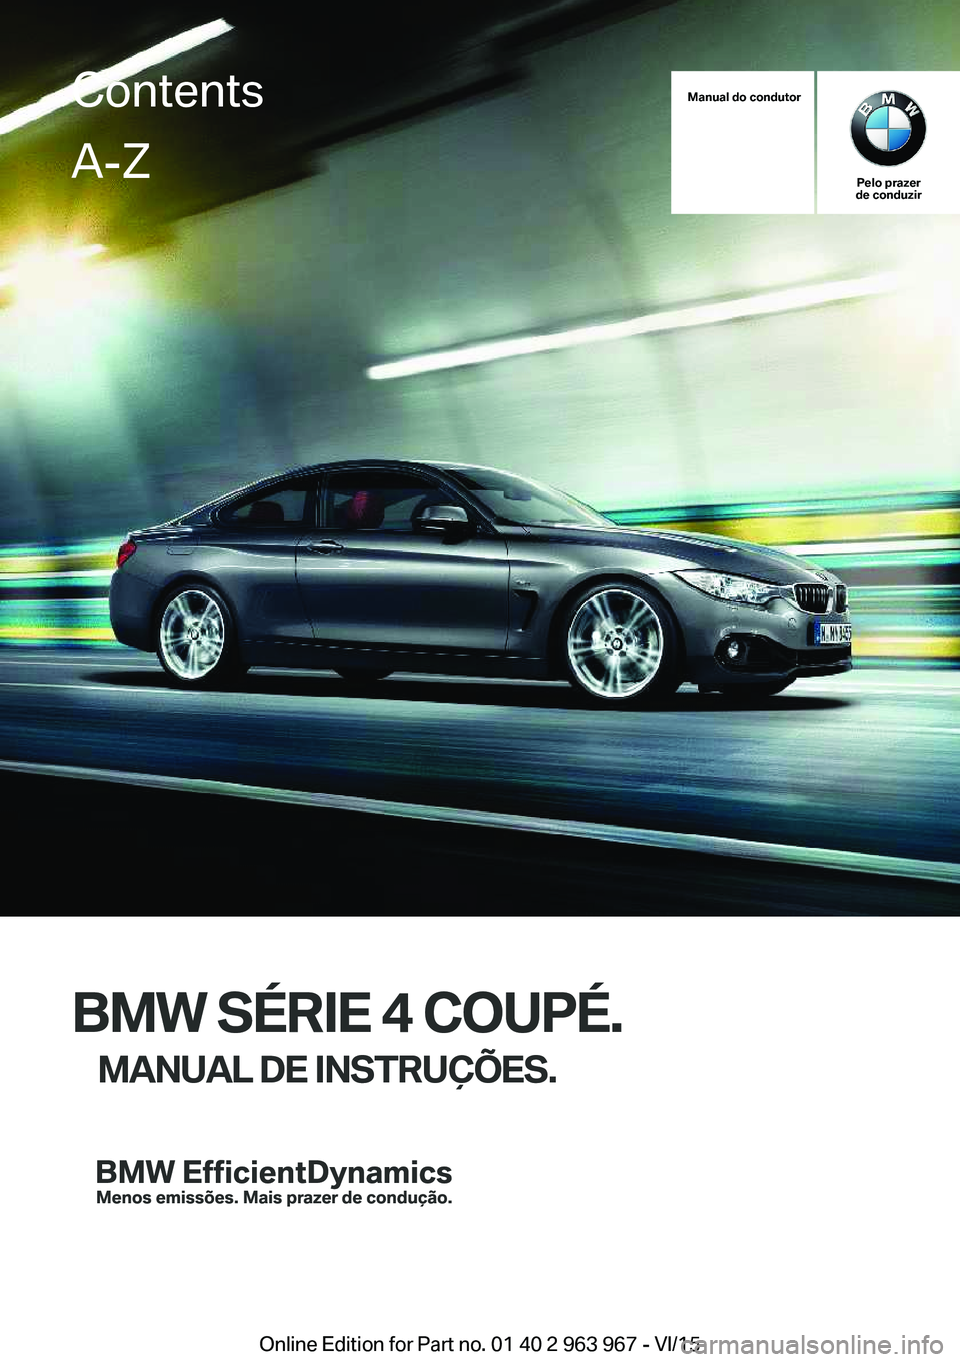 BMW 4 SERIES COUPE 2016  Manual do condutor (in Portuguese) Manual do condutor
Pelo prazer
de conduzir
BMW SÉRIE 4 COUPÉ.
MANUAL DE INSTRUÇÕES.
ContentsA-Z
Online Edition for Part no. 01 40 2 963 967 - VI/15   